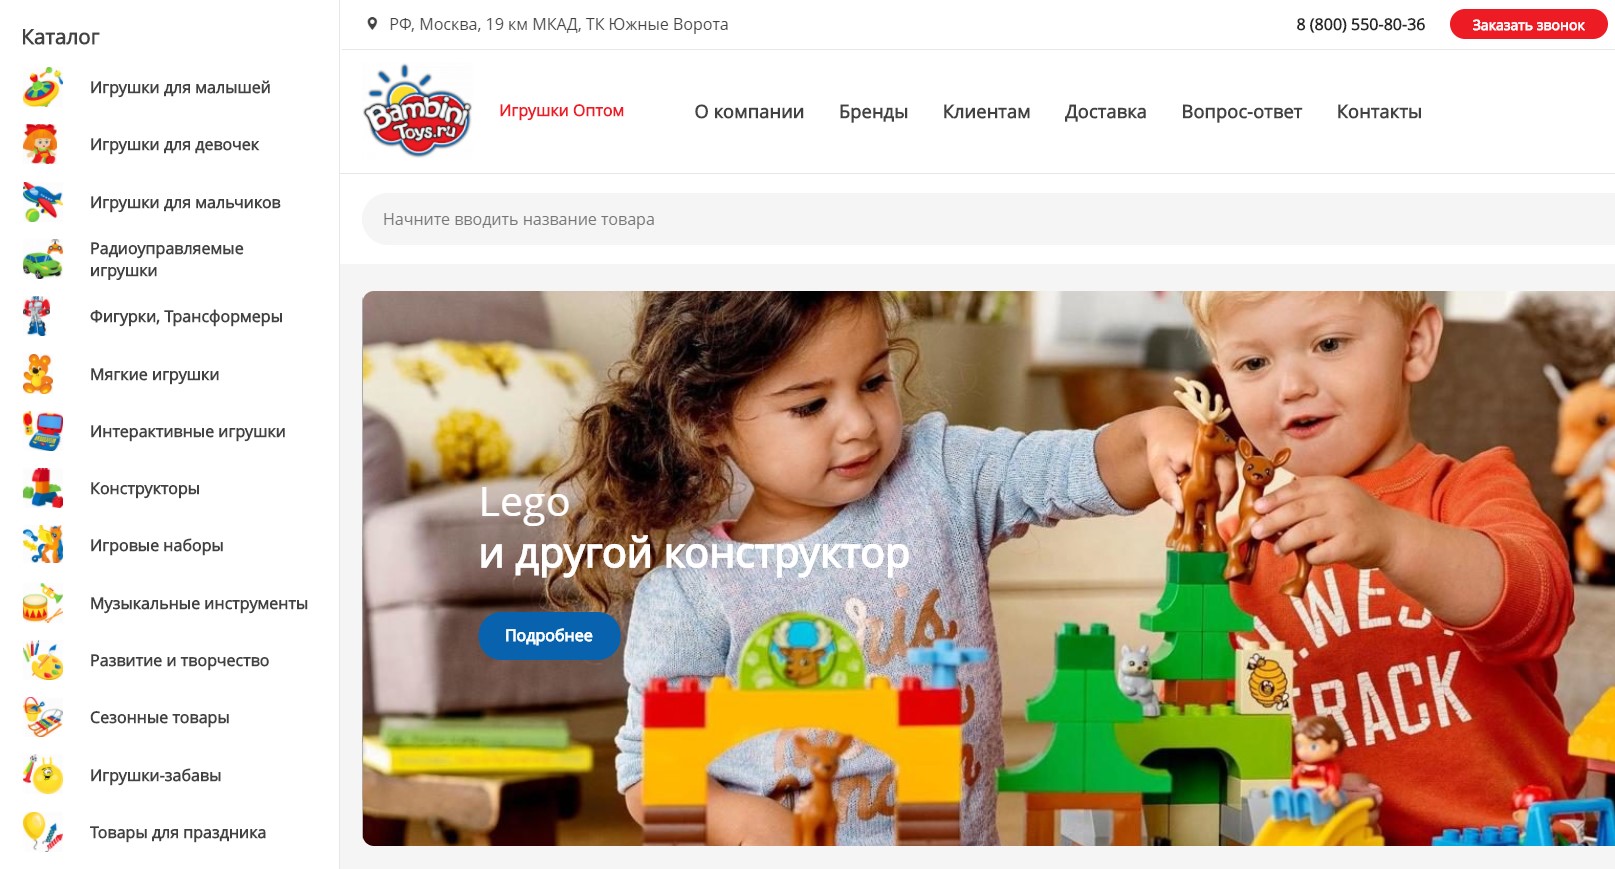 Детские игрушки оптом  в городе Москва, фото 2, телефон продавца: +7 (800) 550-80-36